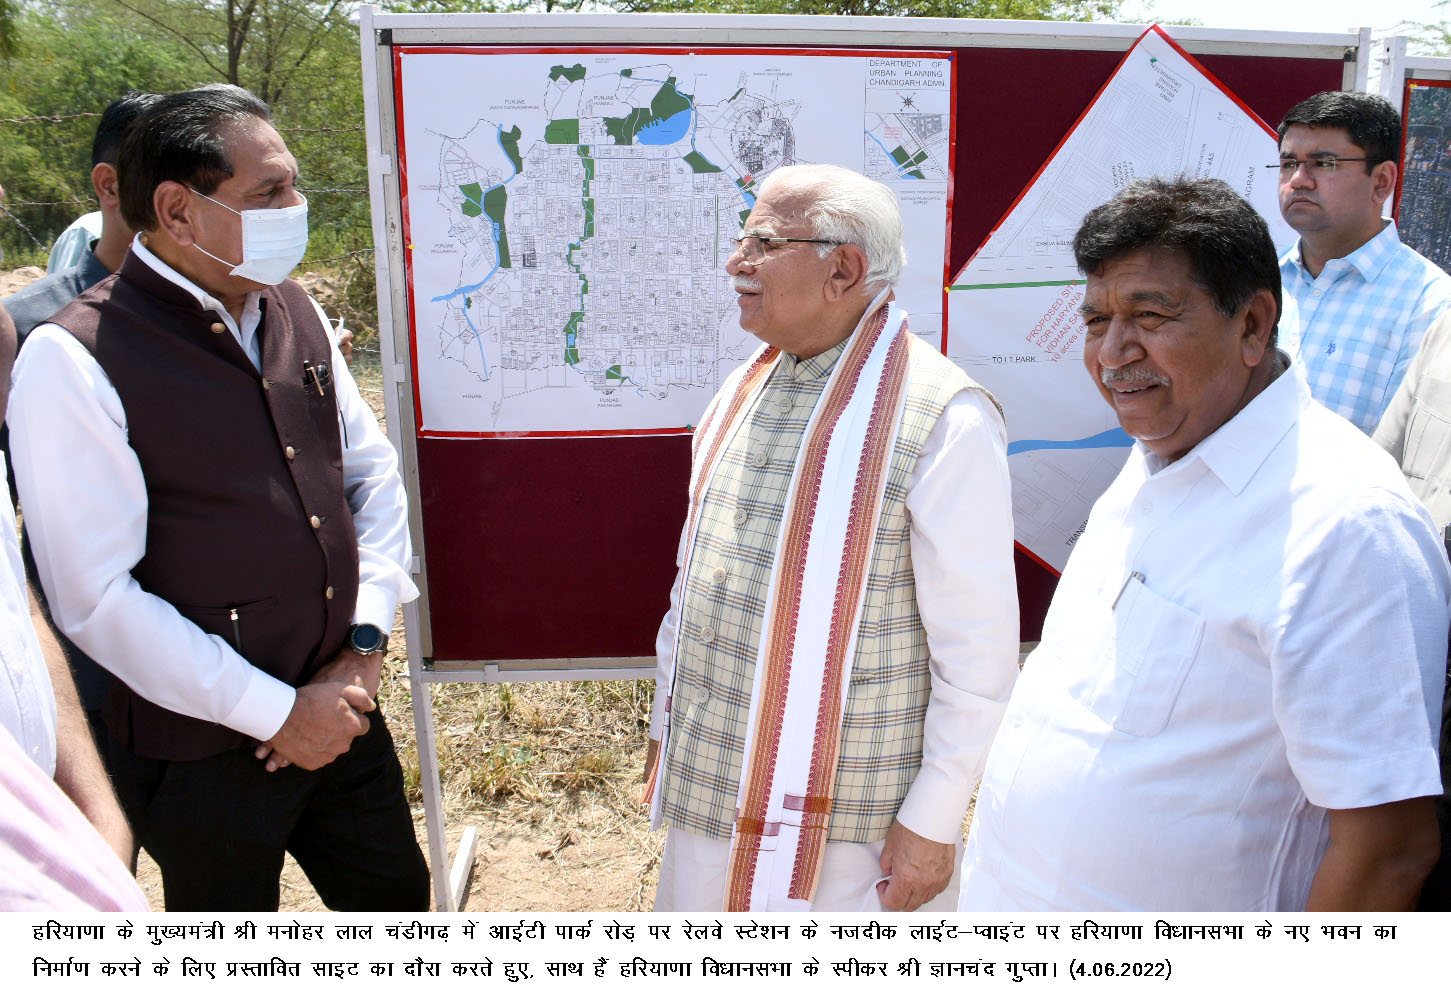 CM visited new building of Haryana Vidhan Sabha proposed site